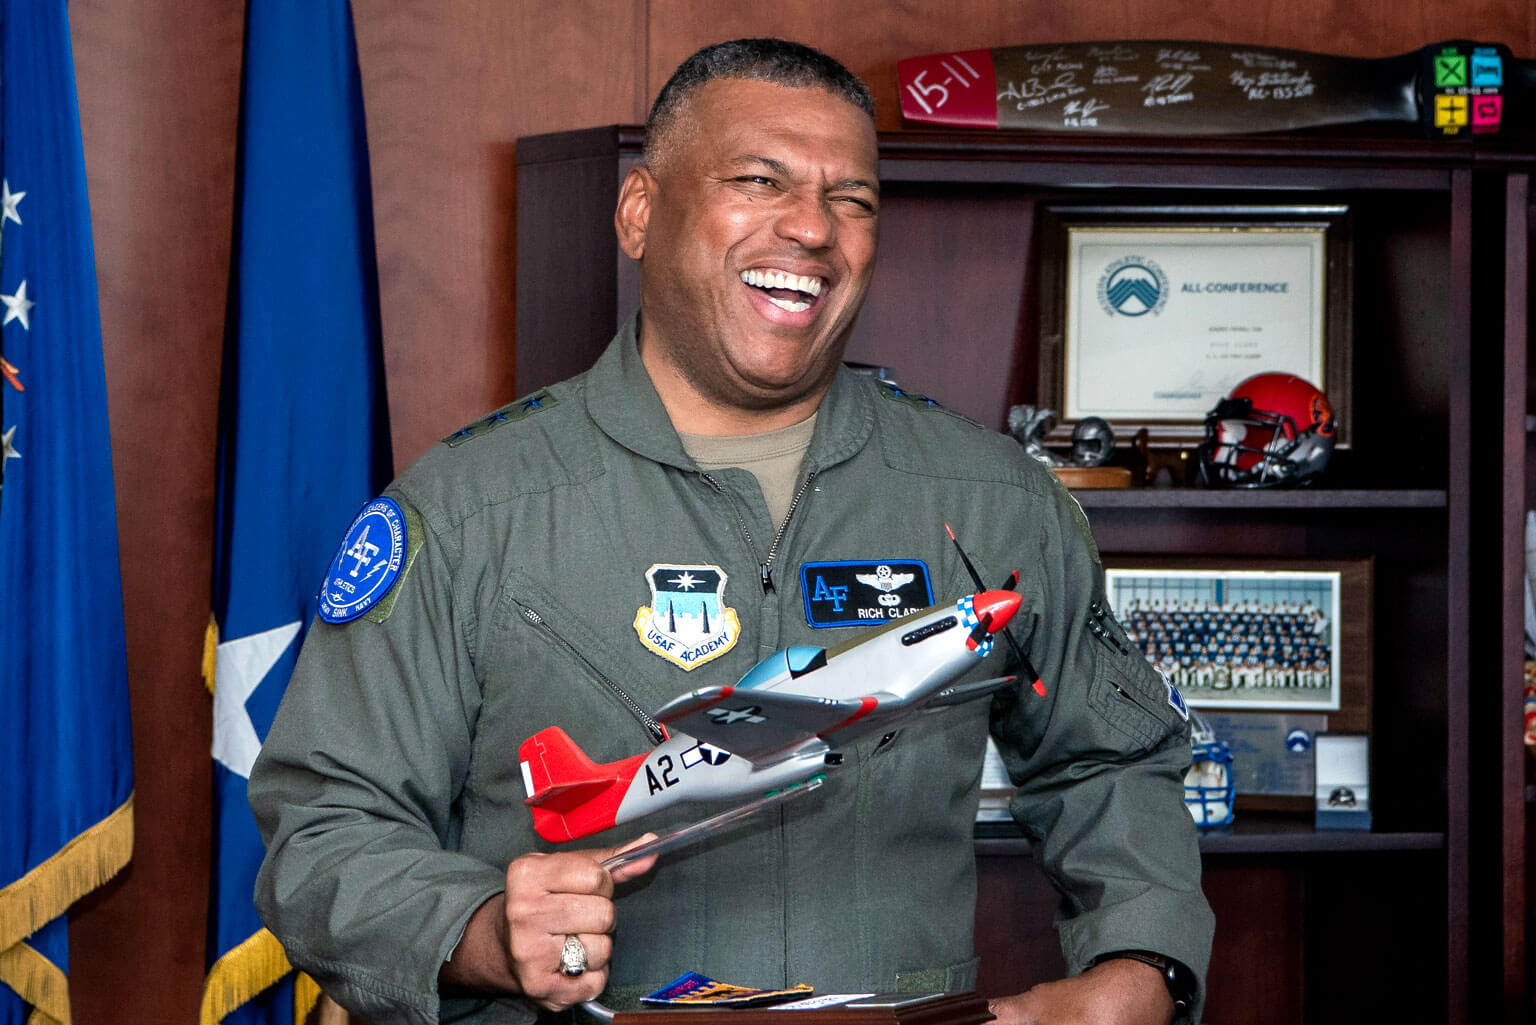 U.S. Air Force Academy Superintendent Lt. Gen. Richard Clark displays his replica of the P-51 Mustang in his office.